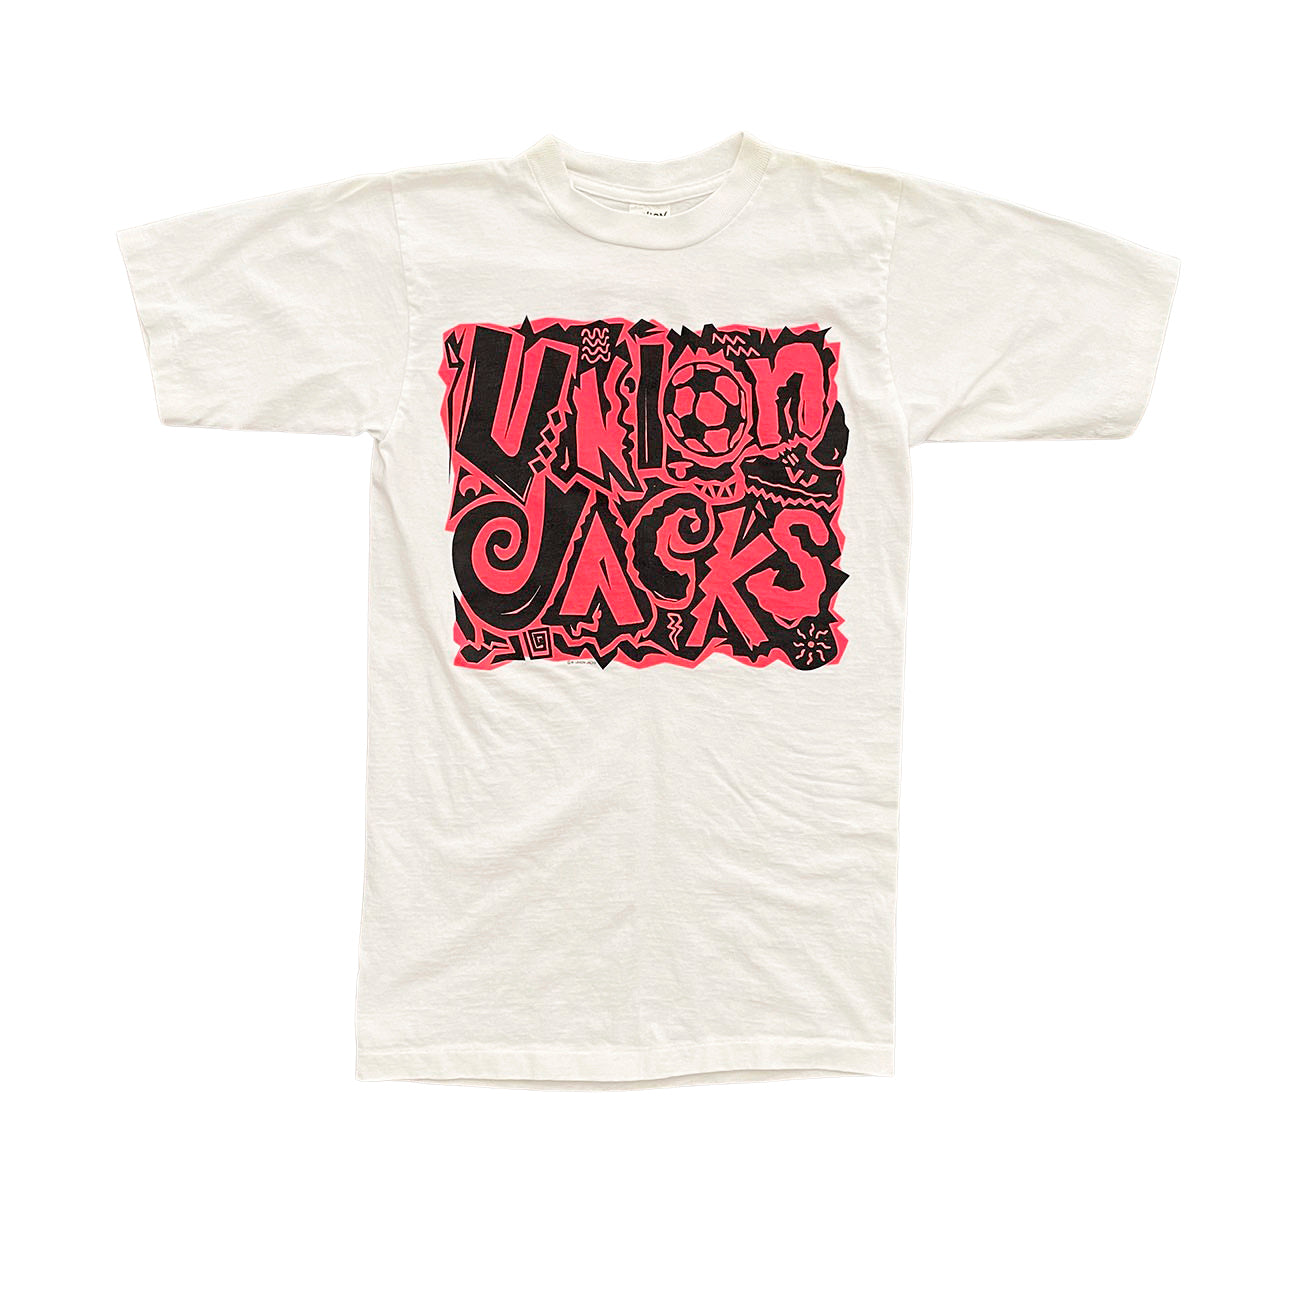 Union Jacks Neon Graphic T-Shirt - S